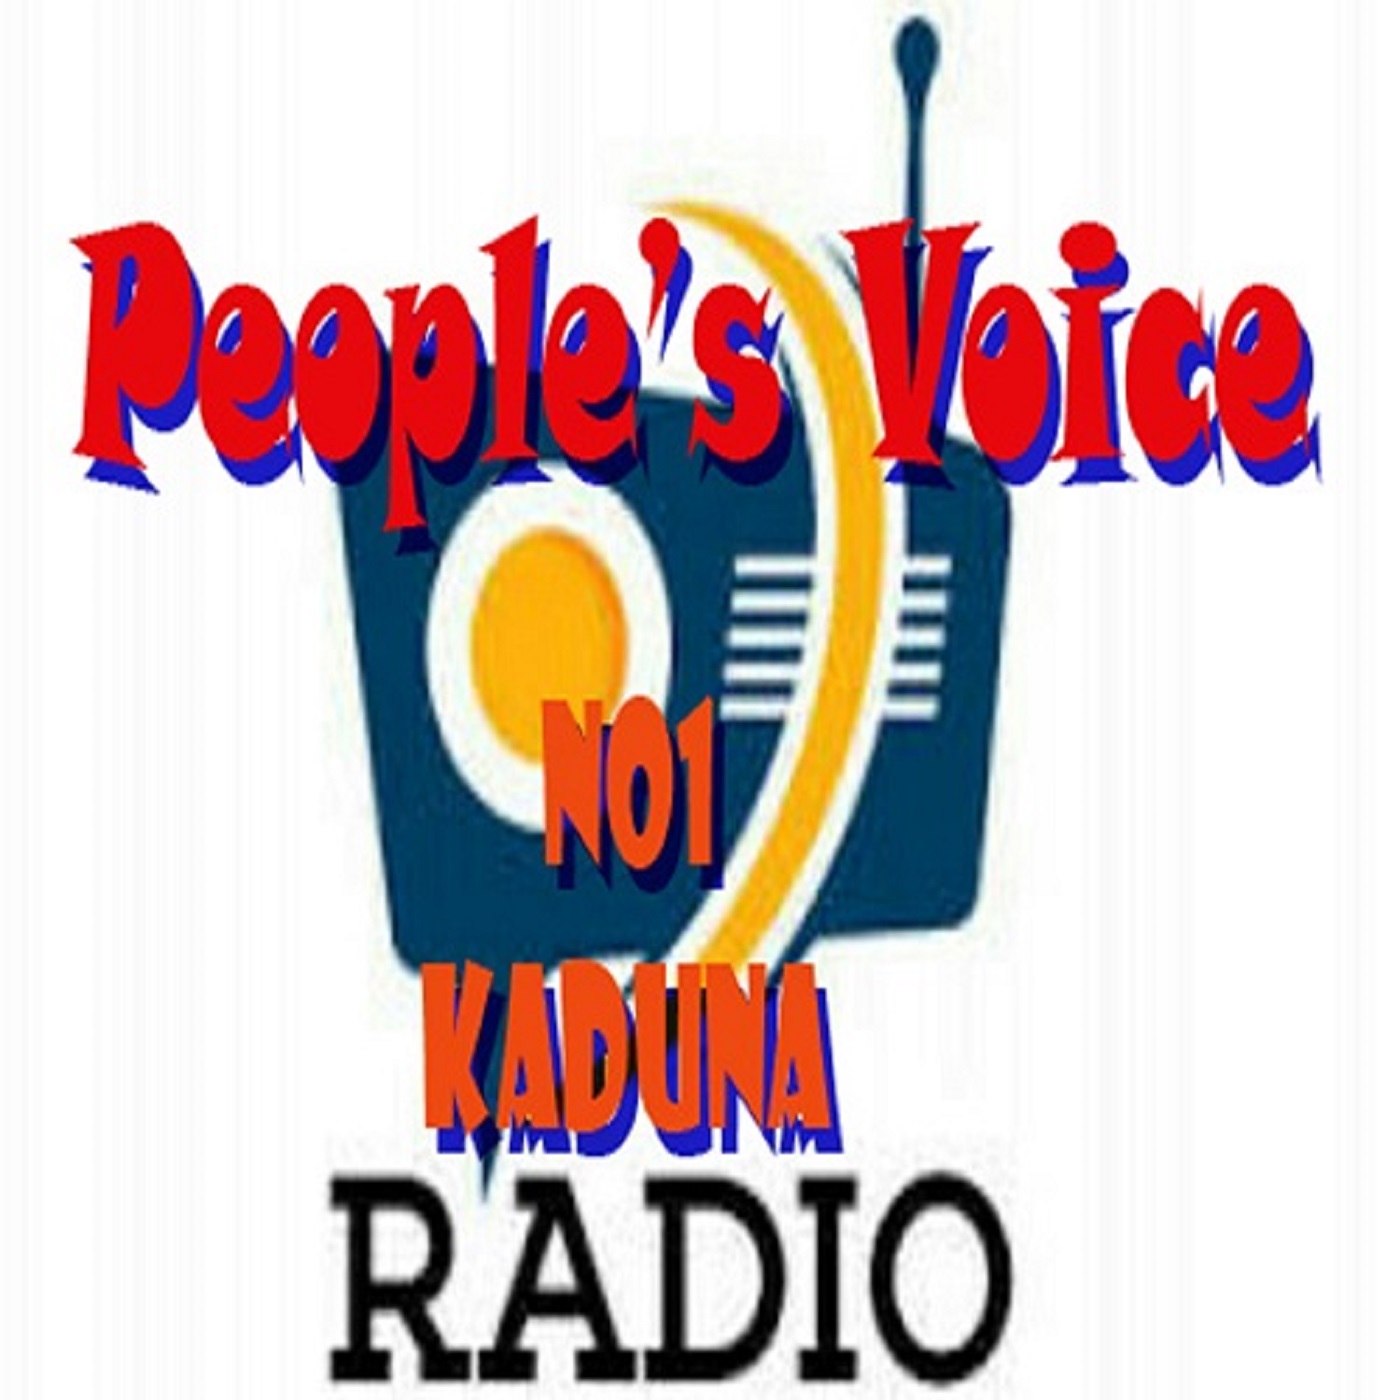 PEOPLES VOICE NO1 RADIO/TV